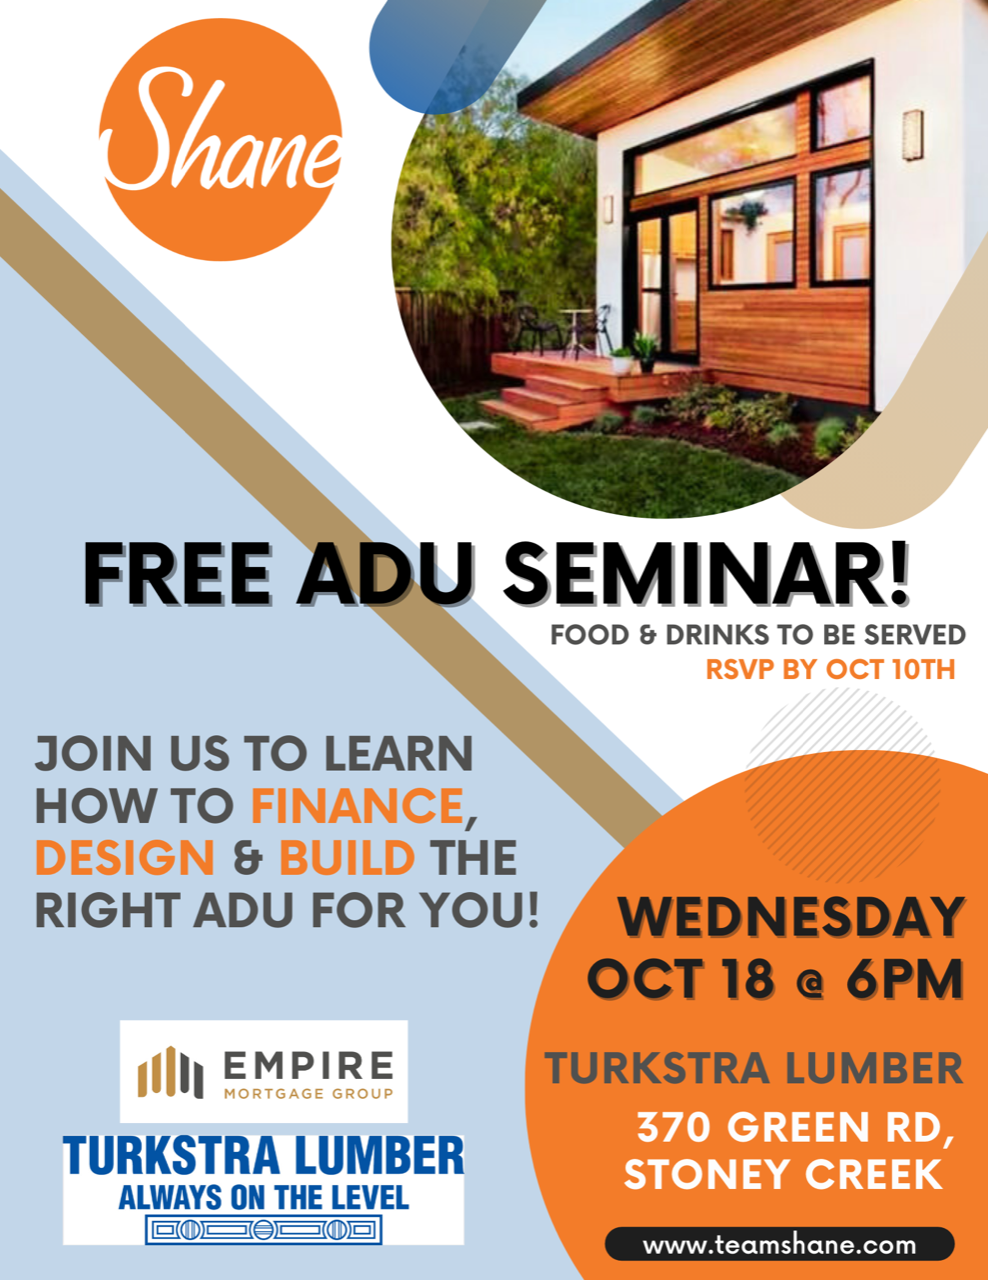 Free ADU Seminar - Wednesday October 18 at 7 pm